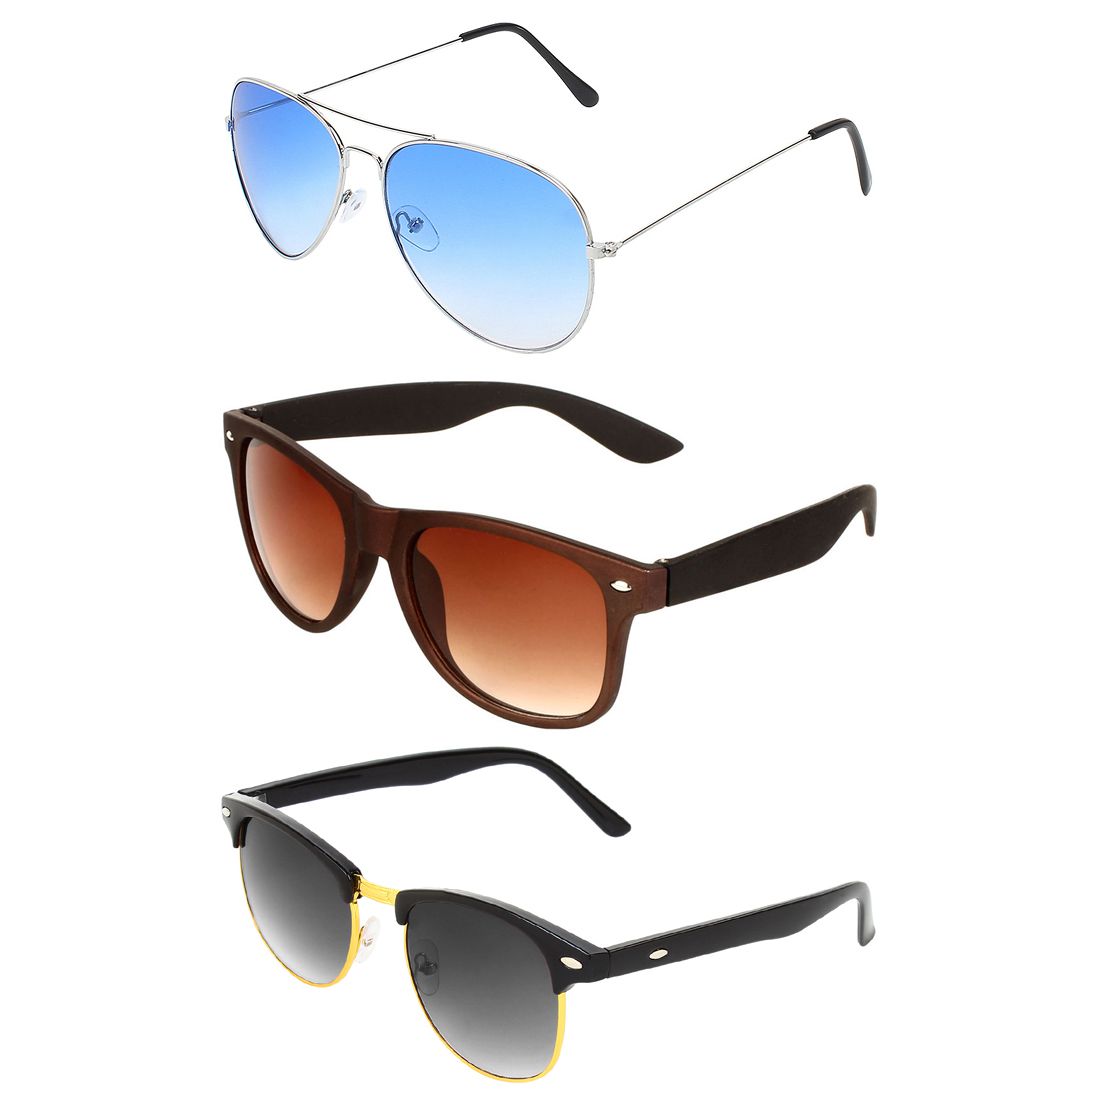 Abner Sunglasses Combo ( 3 pairs of sunglasses ) - Buy Abner Sunglasses ...